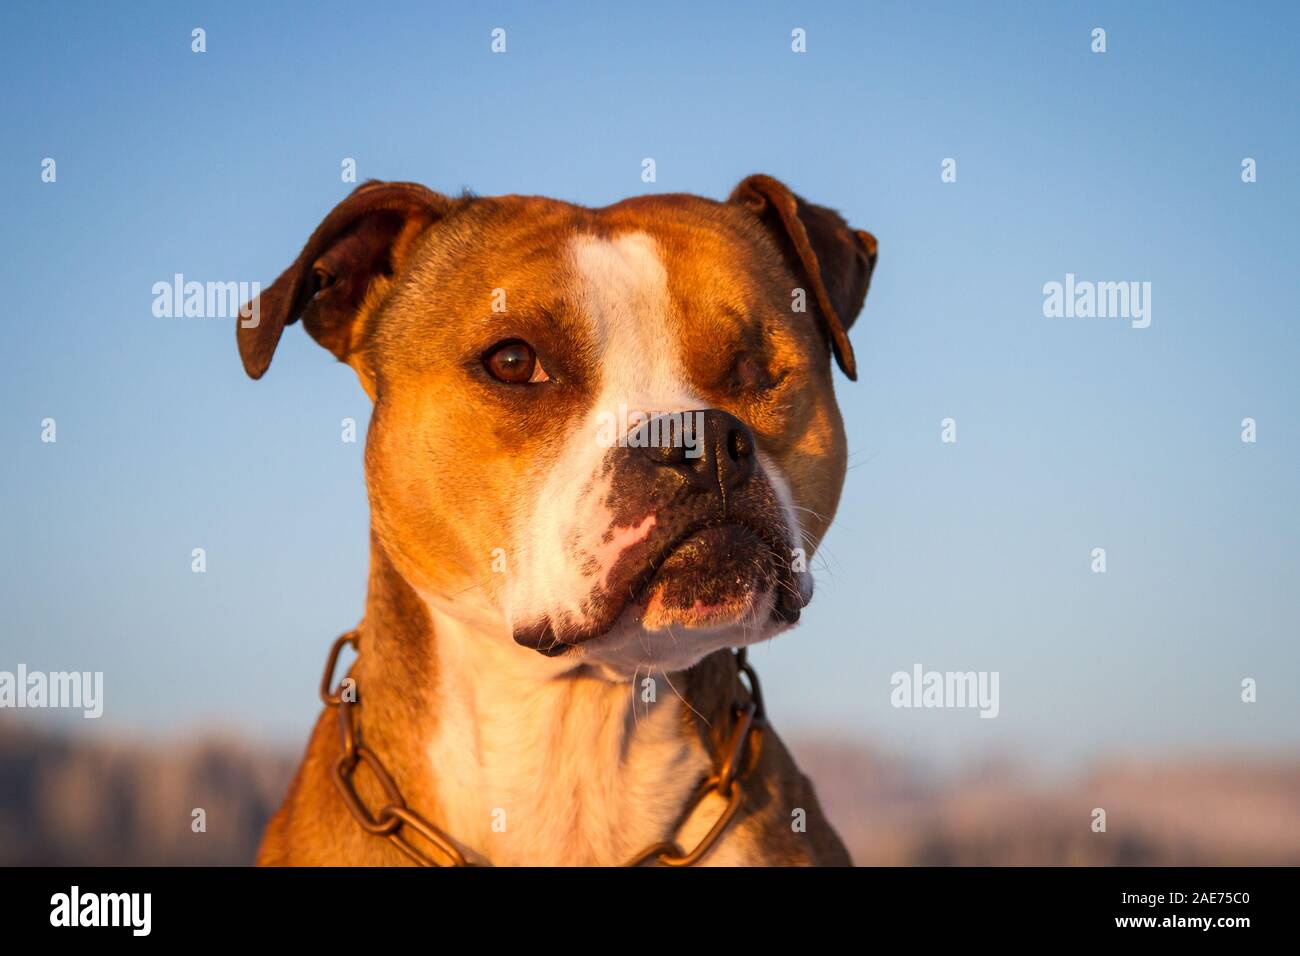 Retrato de un handicap, un perro tuerto American Pit Bull Terrier en el sol de la mañana Foto de stock